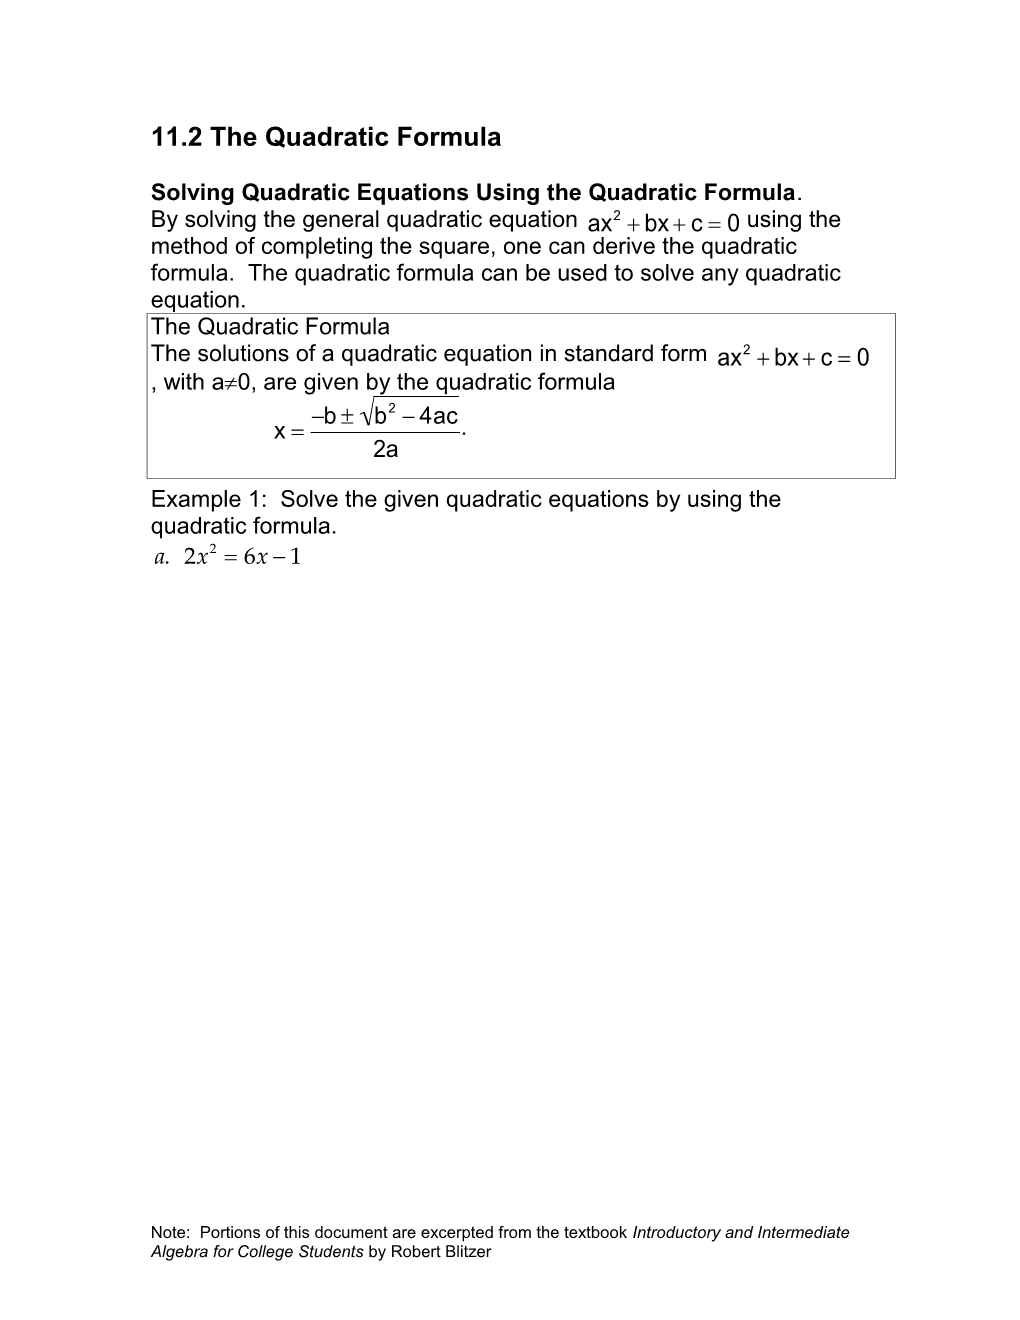 Solving Quadratic Equations Using the Quadratic Formula